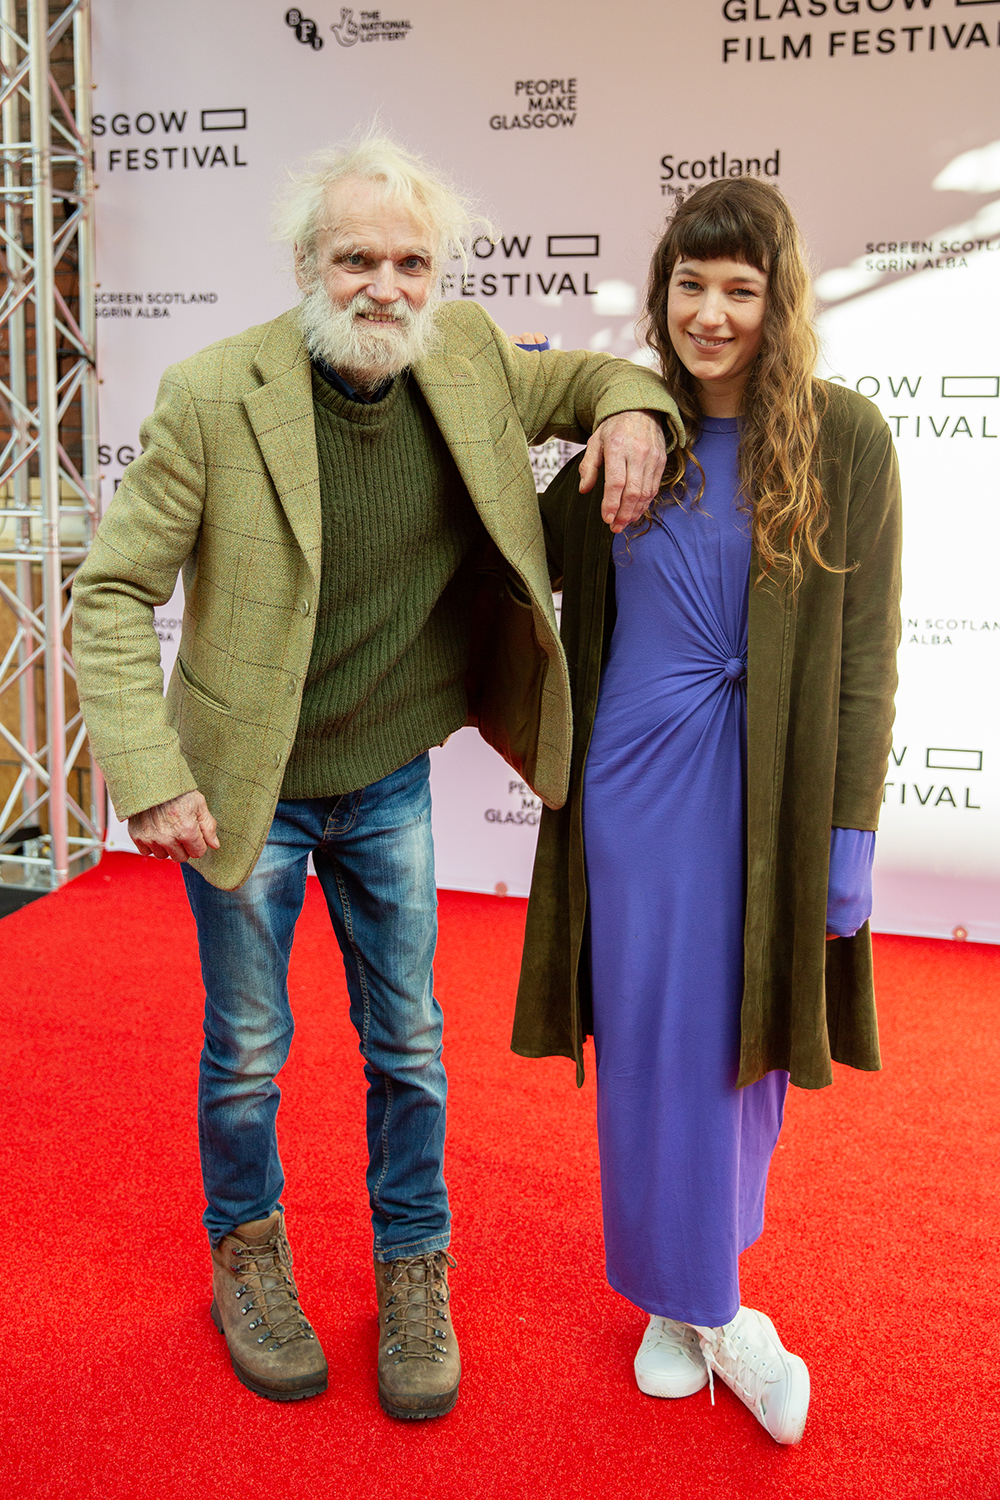 Ken Smith with filmmaker Lizzie MacKenzie at the documentary premiere. (Amy Muir/Glasgow Film Festival)